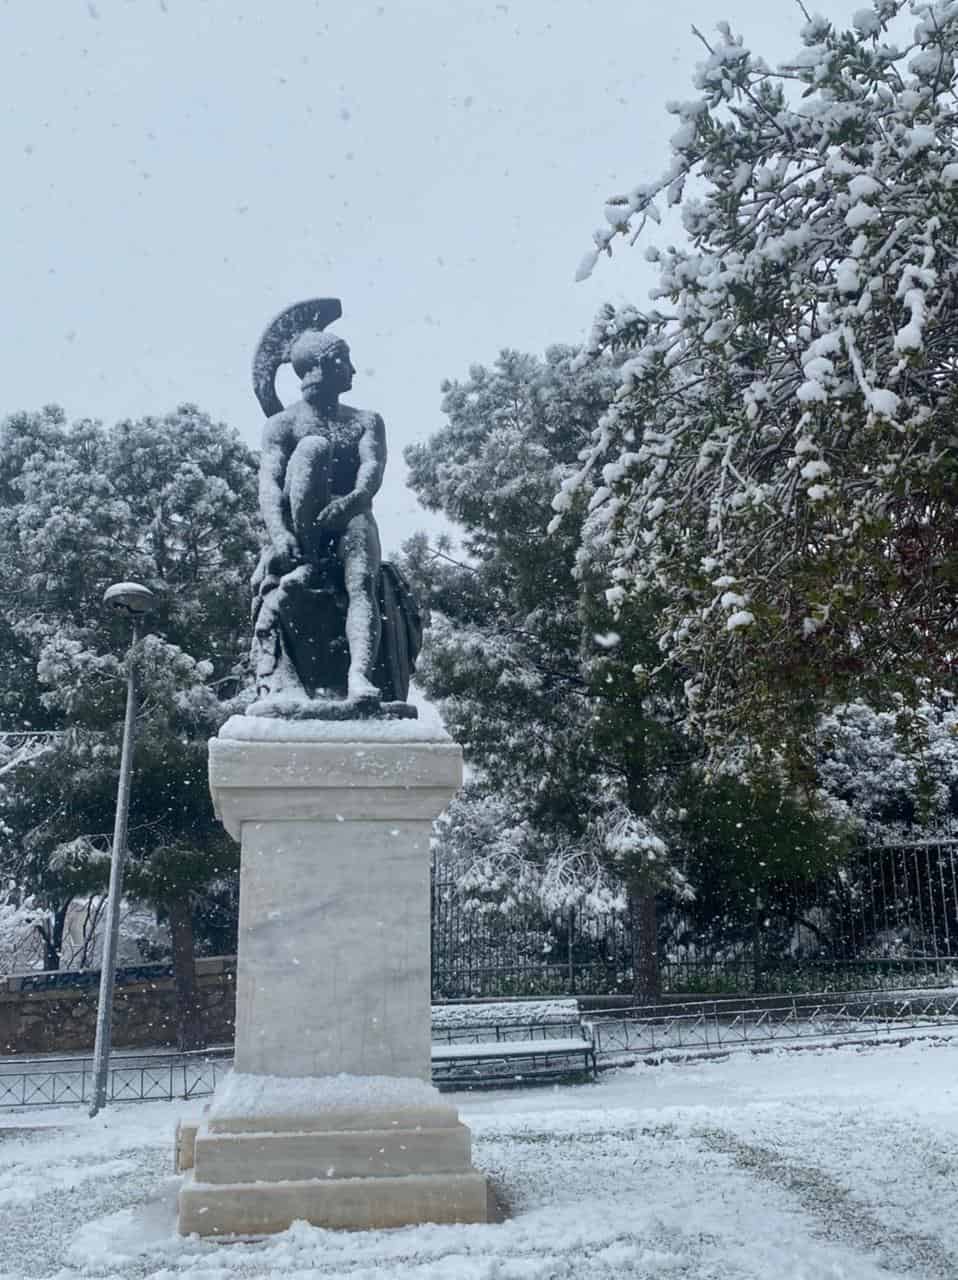 Elpis Snowstorm Athens January 24, 2022.